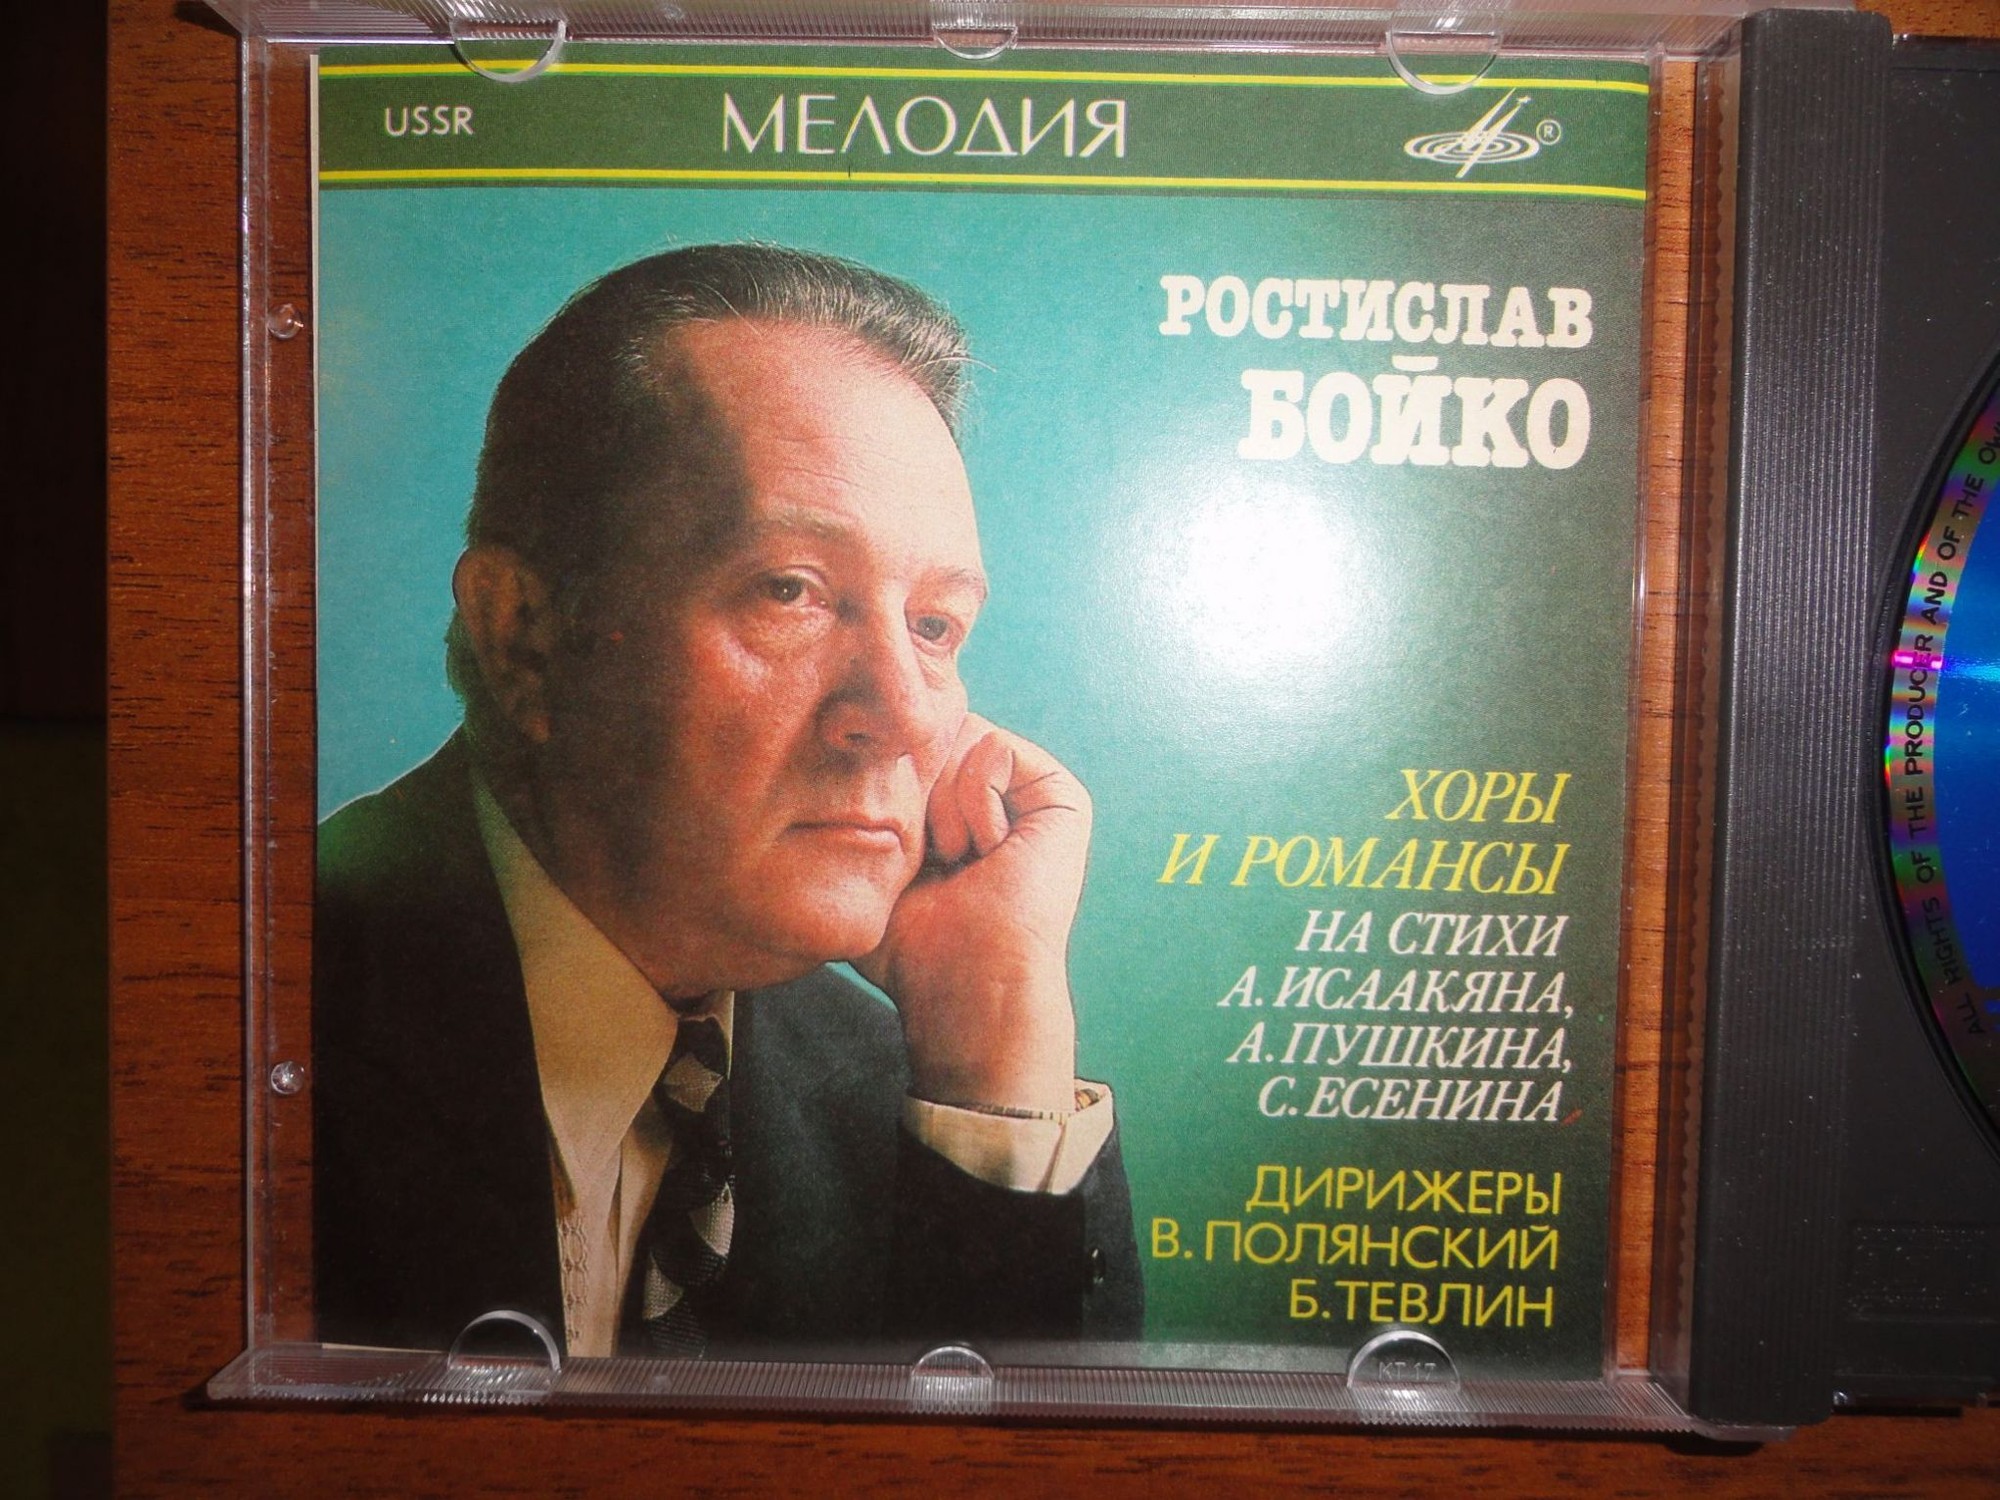 Rostislav Boiko - Choruses & Romances on verses by Isaakyan, Pushkin, Esenin - Polynsky, Tevlin